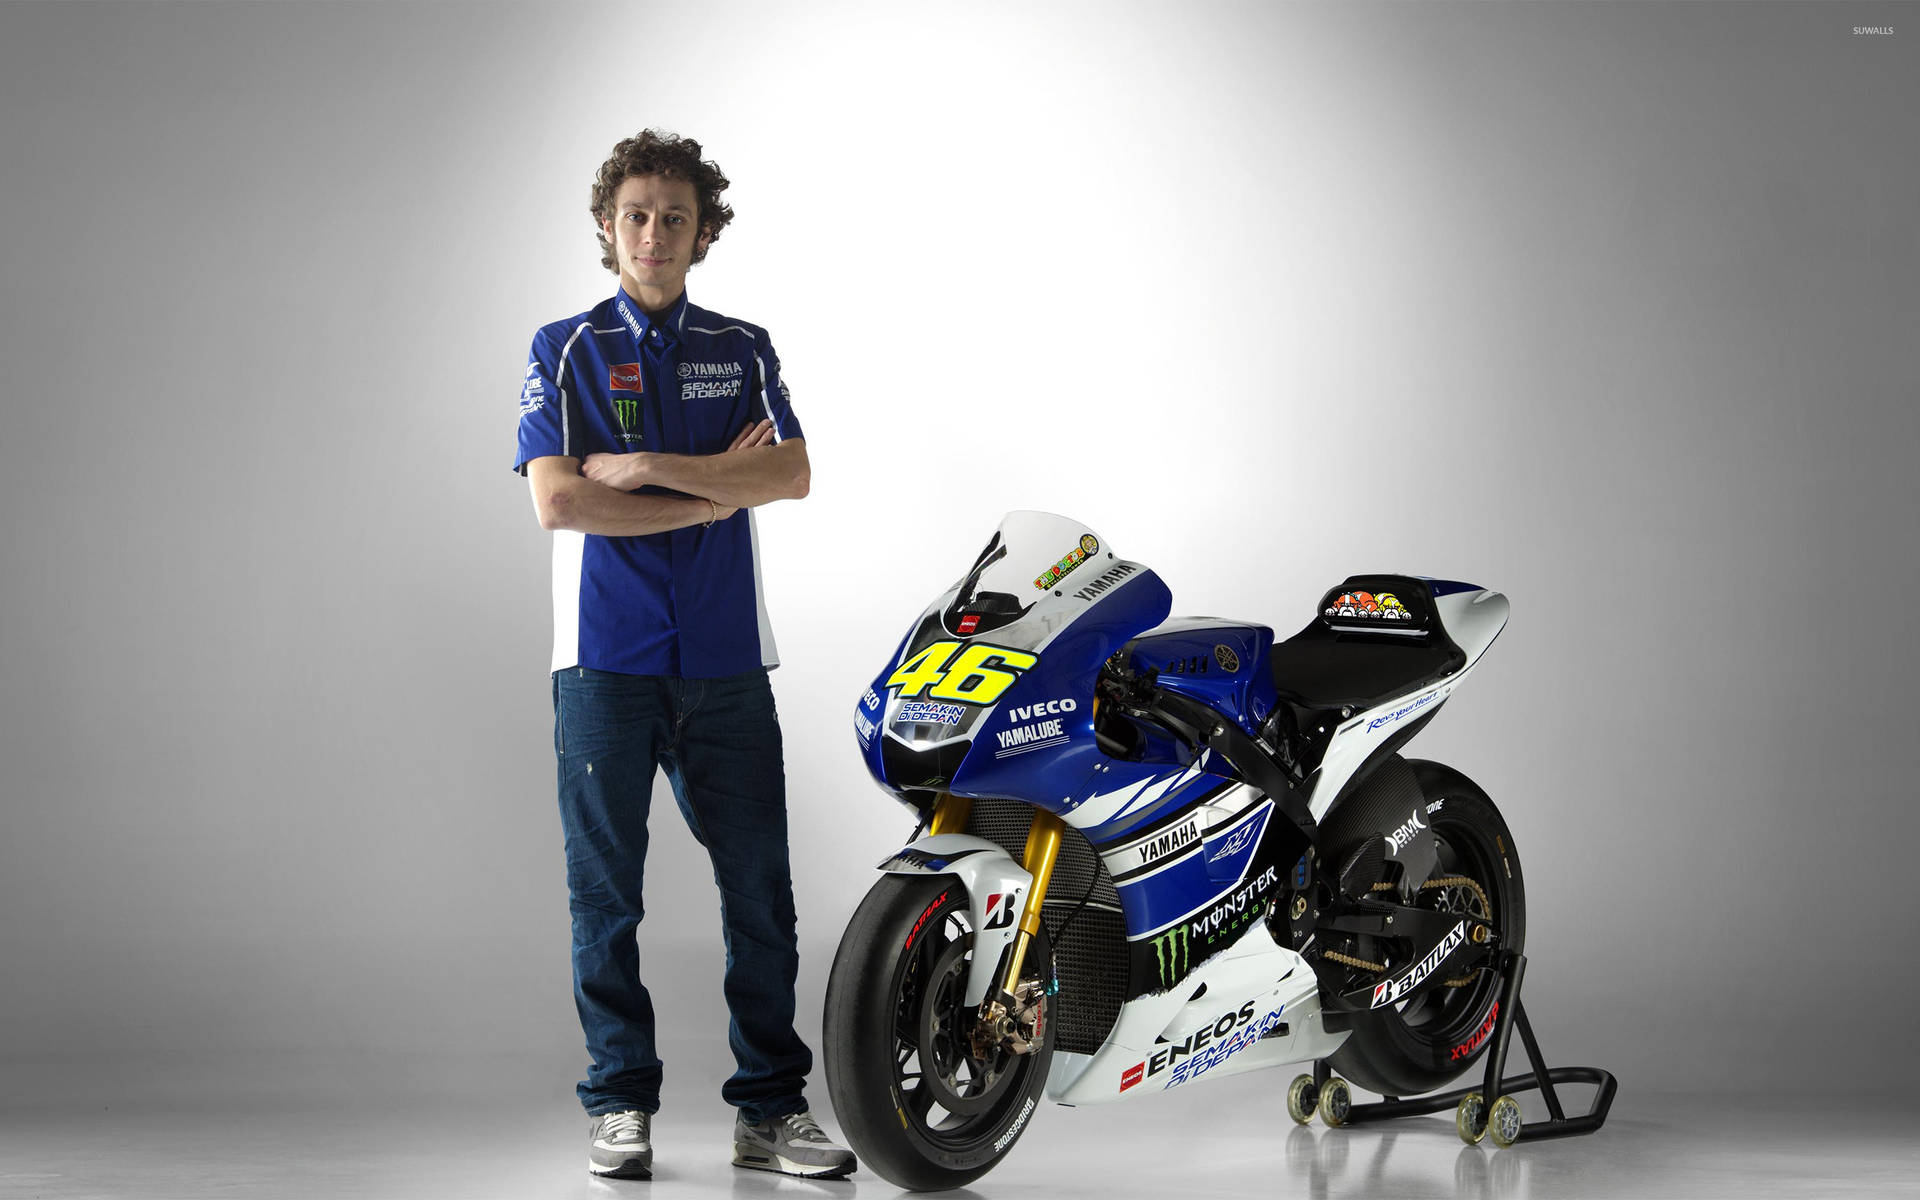 Valentinorossi, Yamaha-lagets Racer. Wallpaper